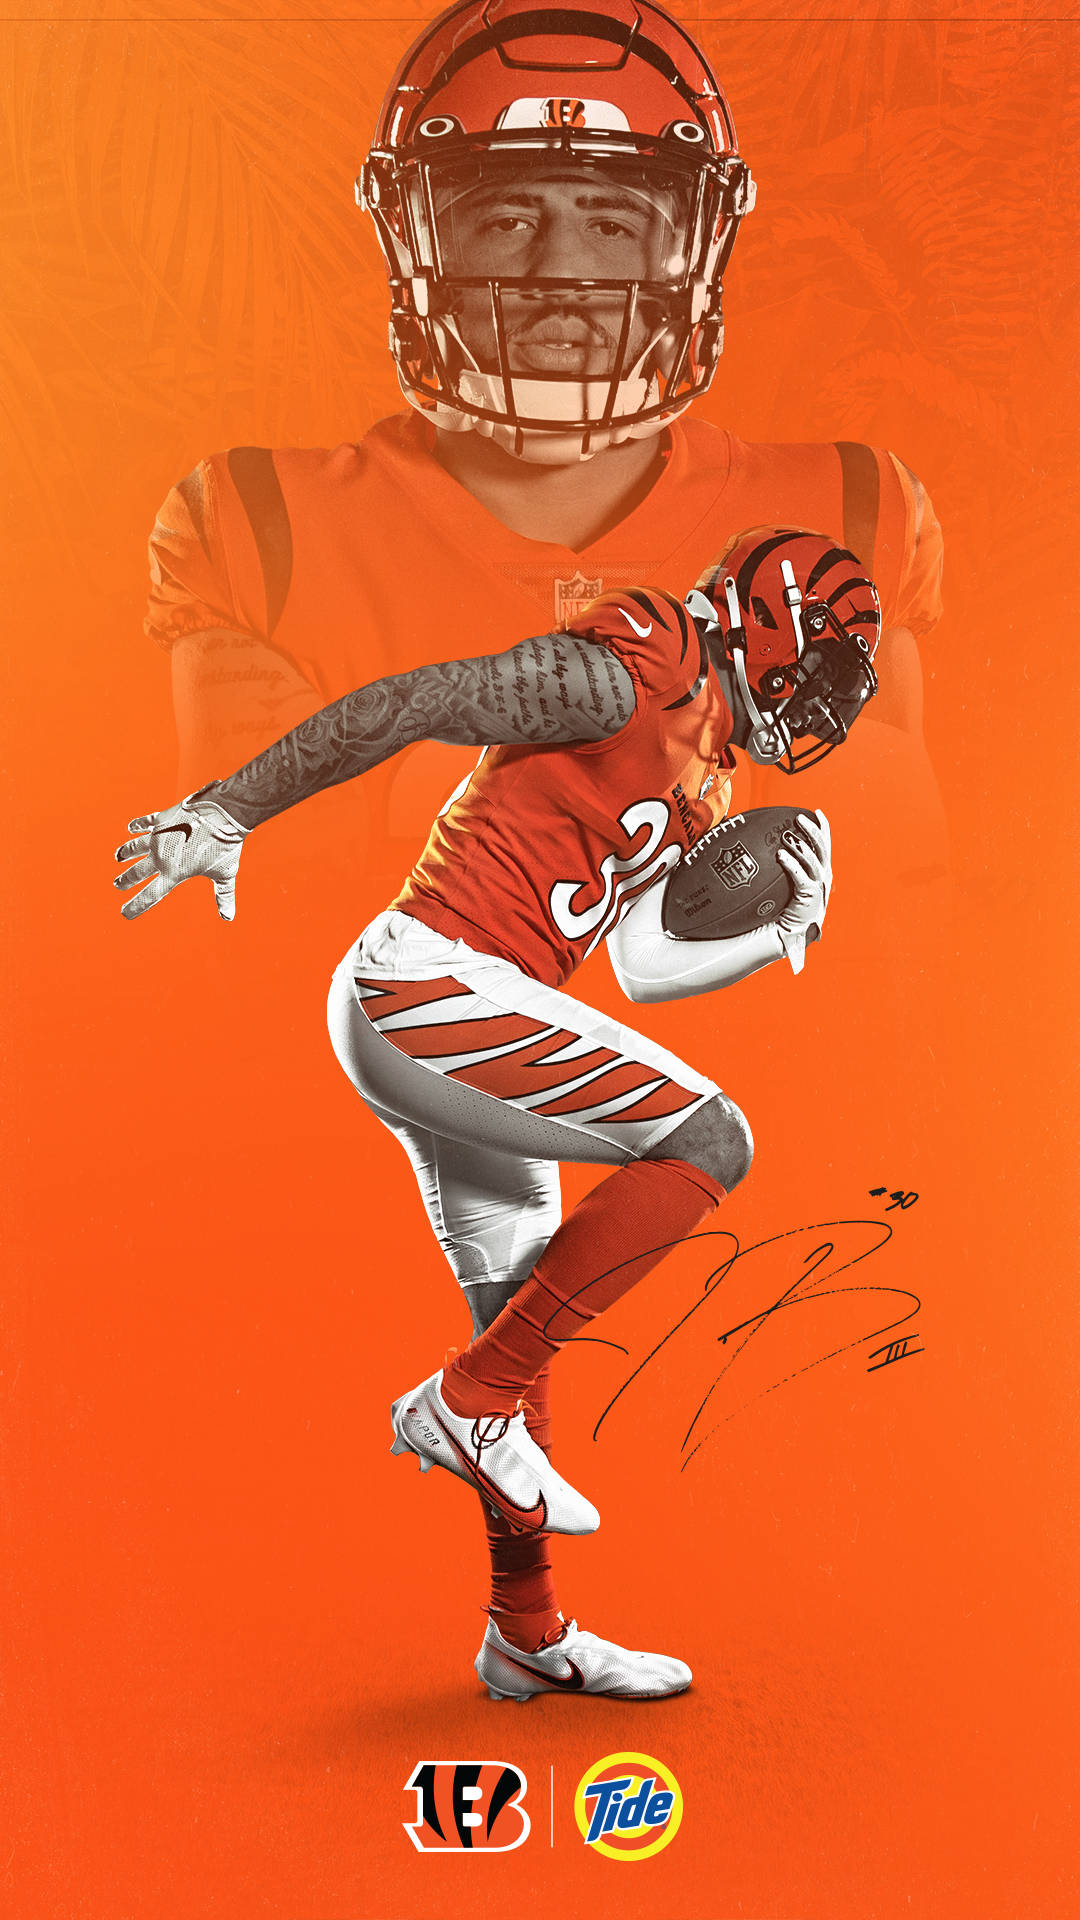 Cincinnati Bengals Orange Poster Wallpaper